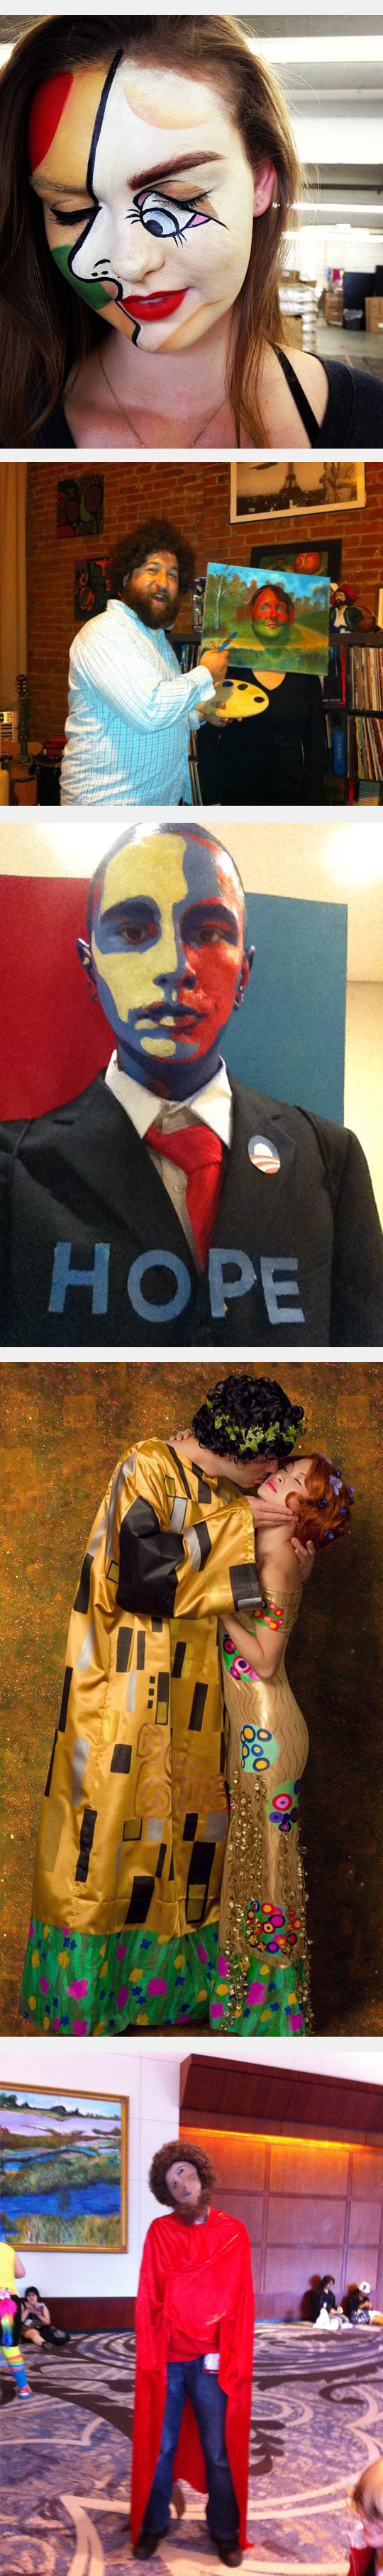 funny-art-cosplay-painting-Van-Gogh-Obama